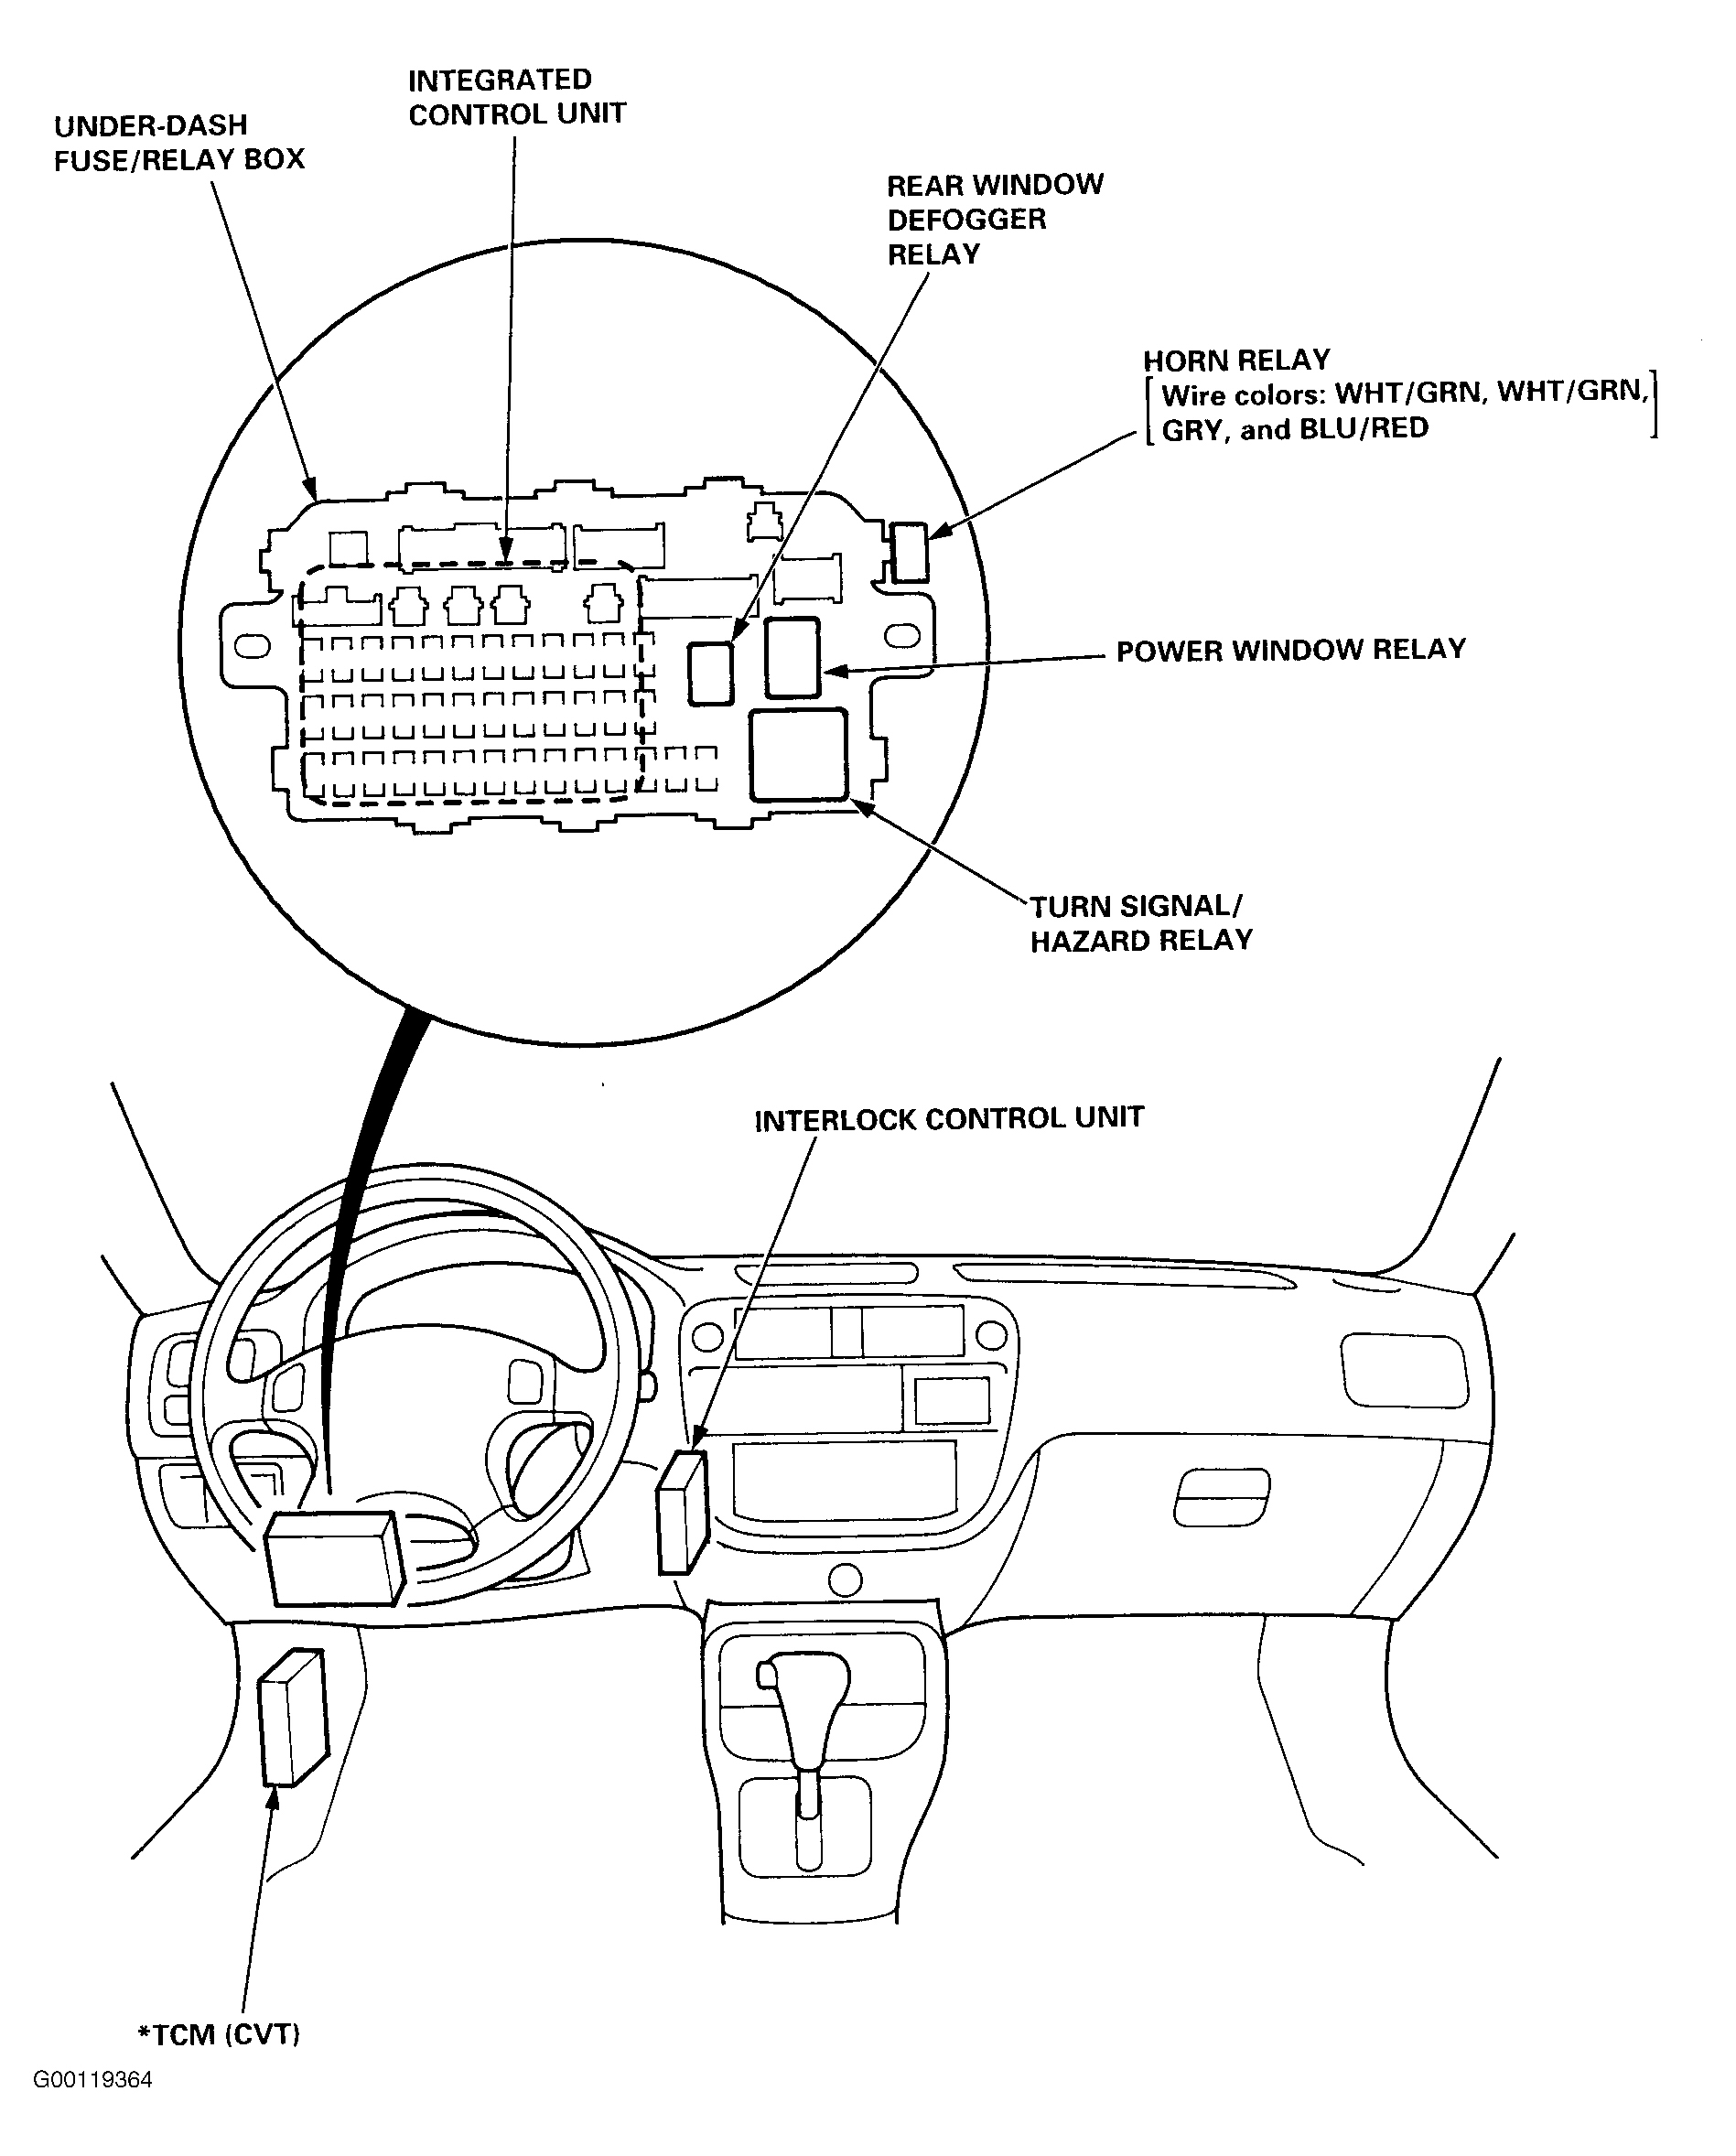 Honda Civic HX 2000 - Component Locations -  Locating Under-Dash Fuse/Relay Box (1996-97)